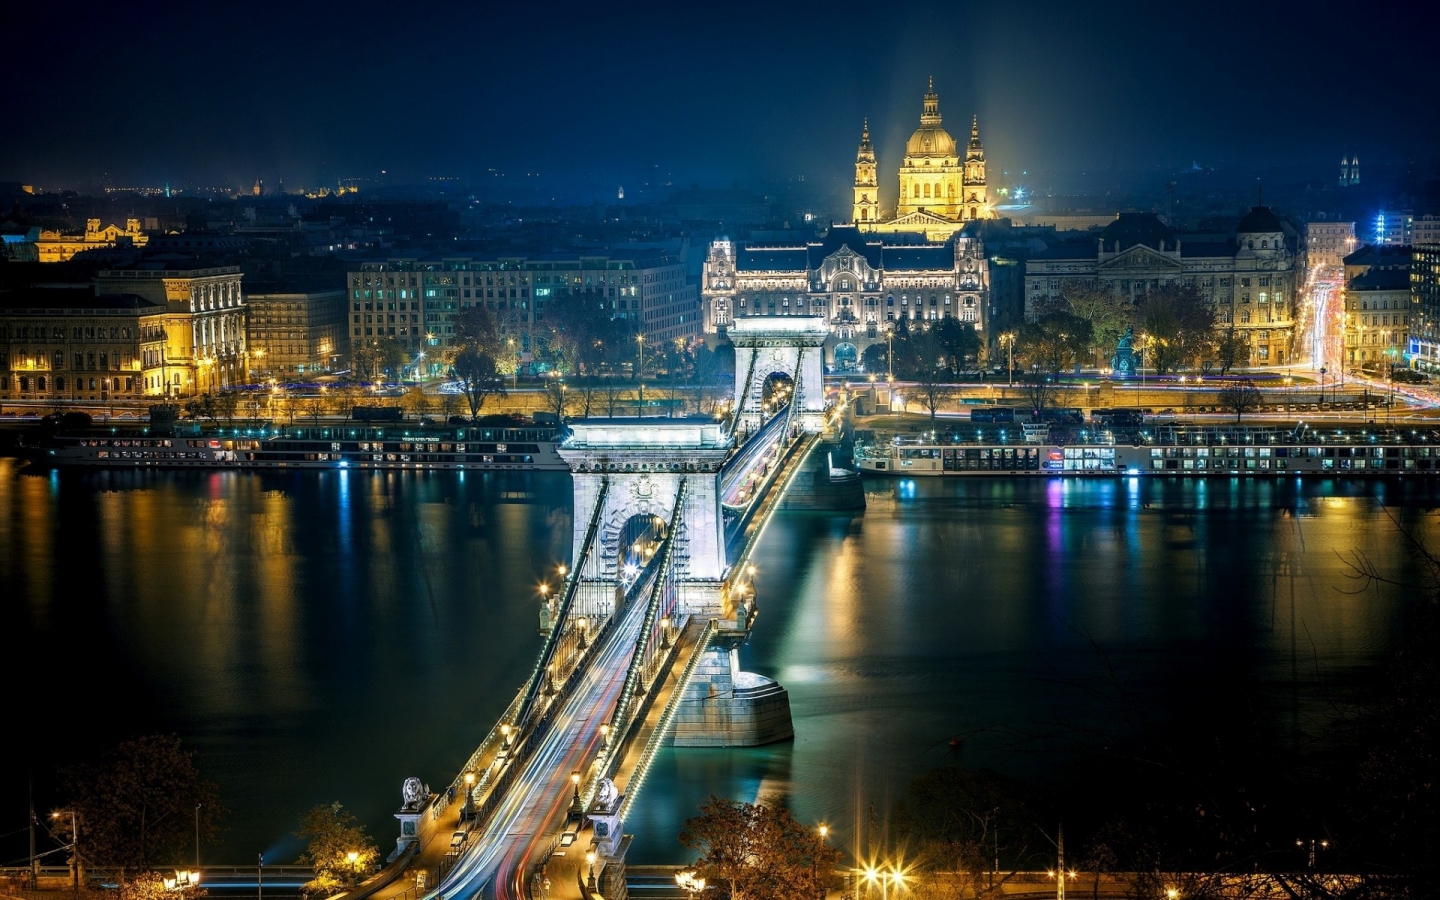 Szechenyi Chain Bridge Budapest for 1440 x 900 widescreen resolution